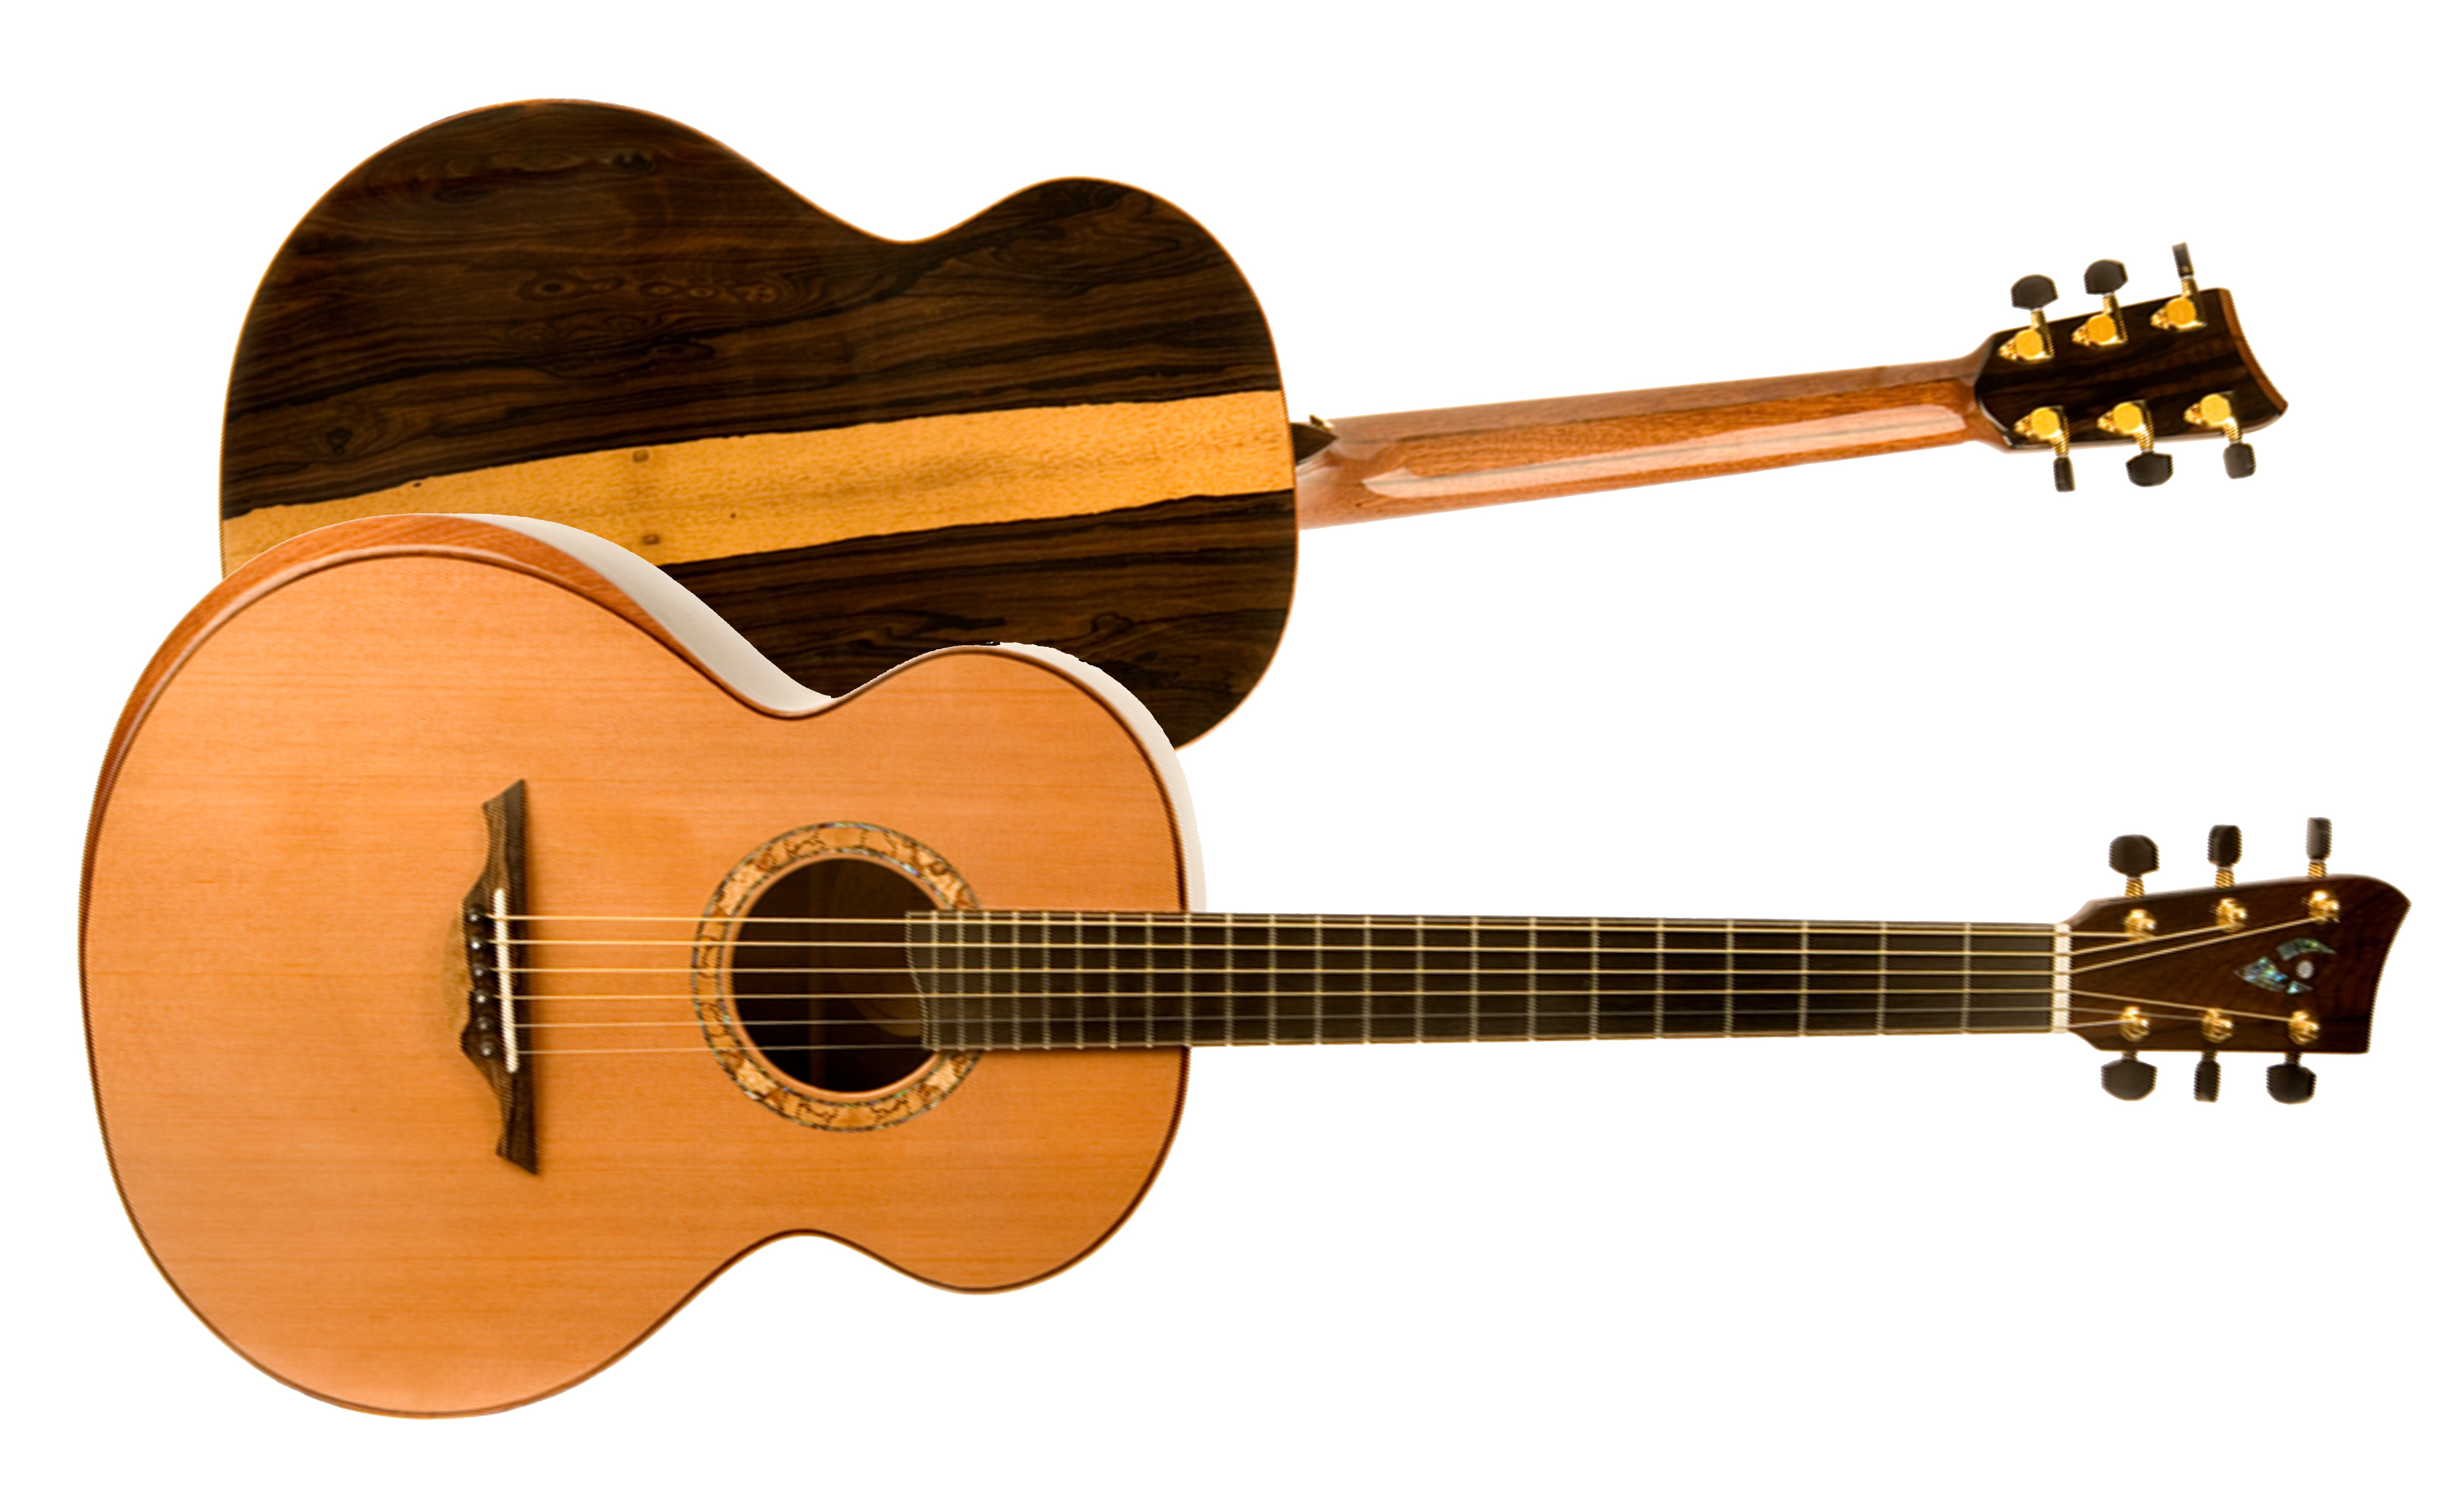 Lakestone SL Cedar/Ziricote, Acoustic Guitar for sale at Richards Guitars.